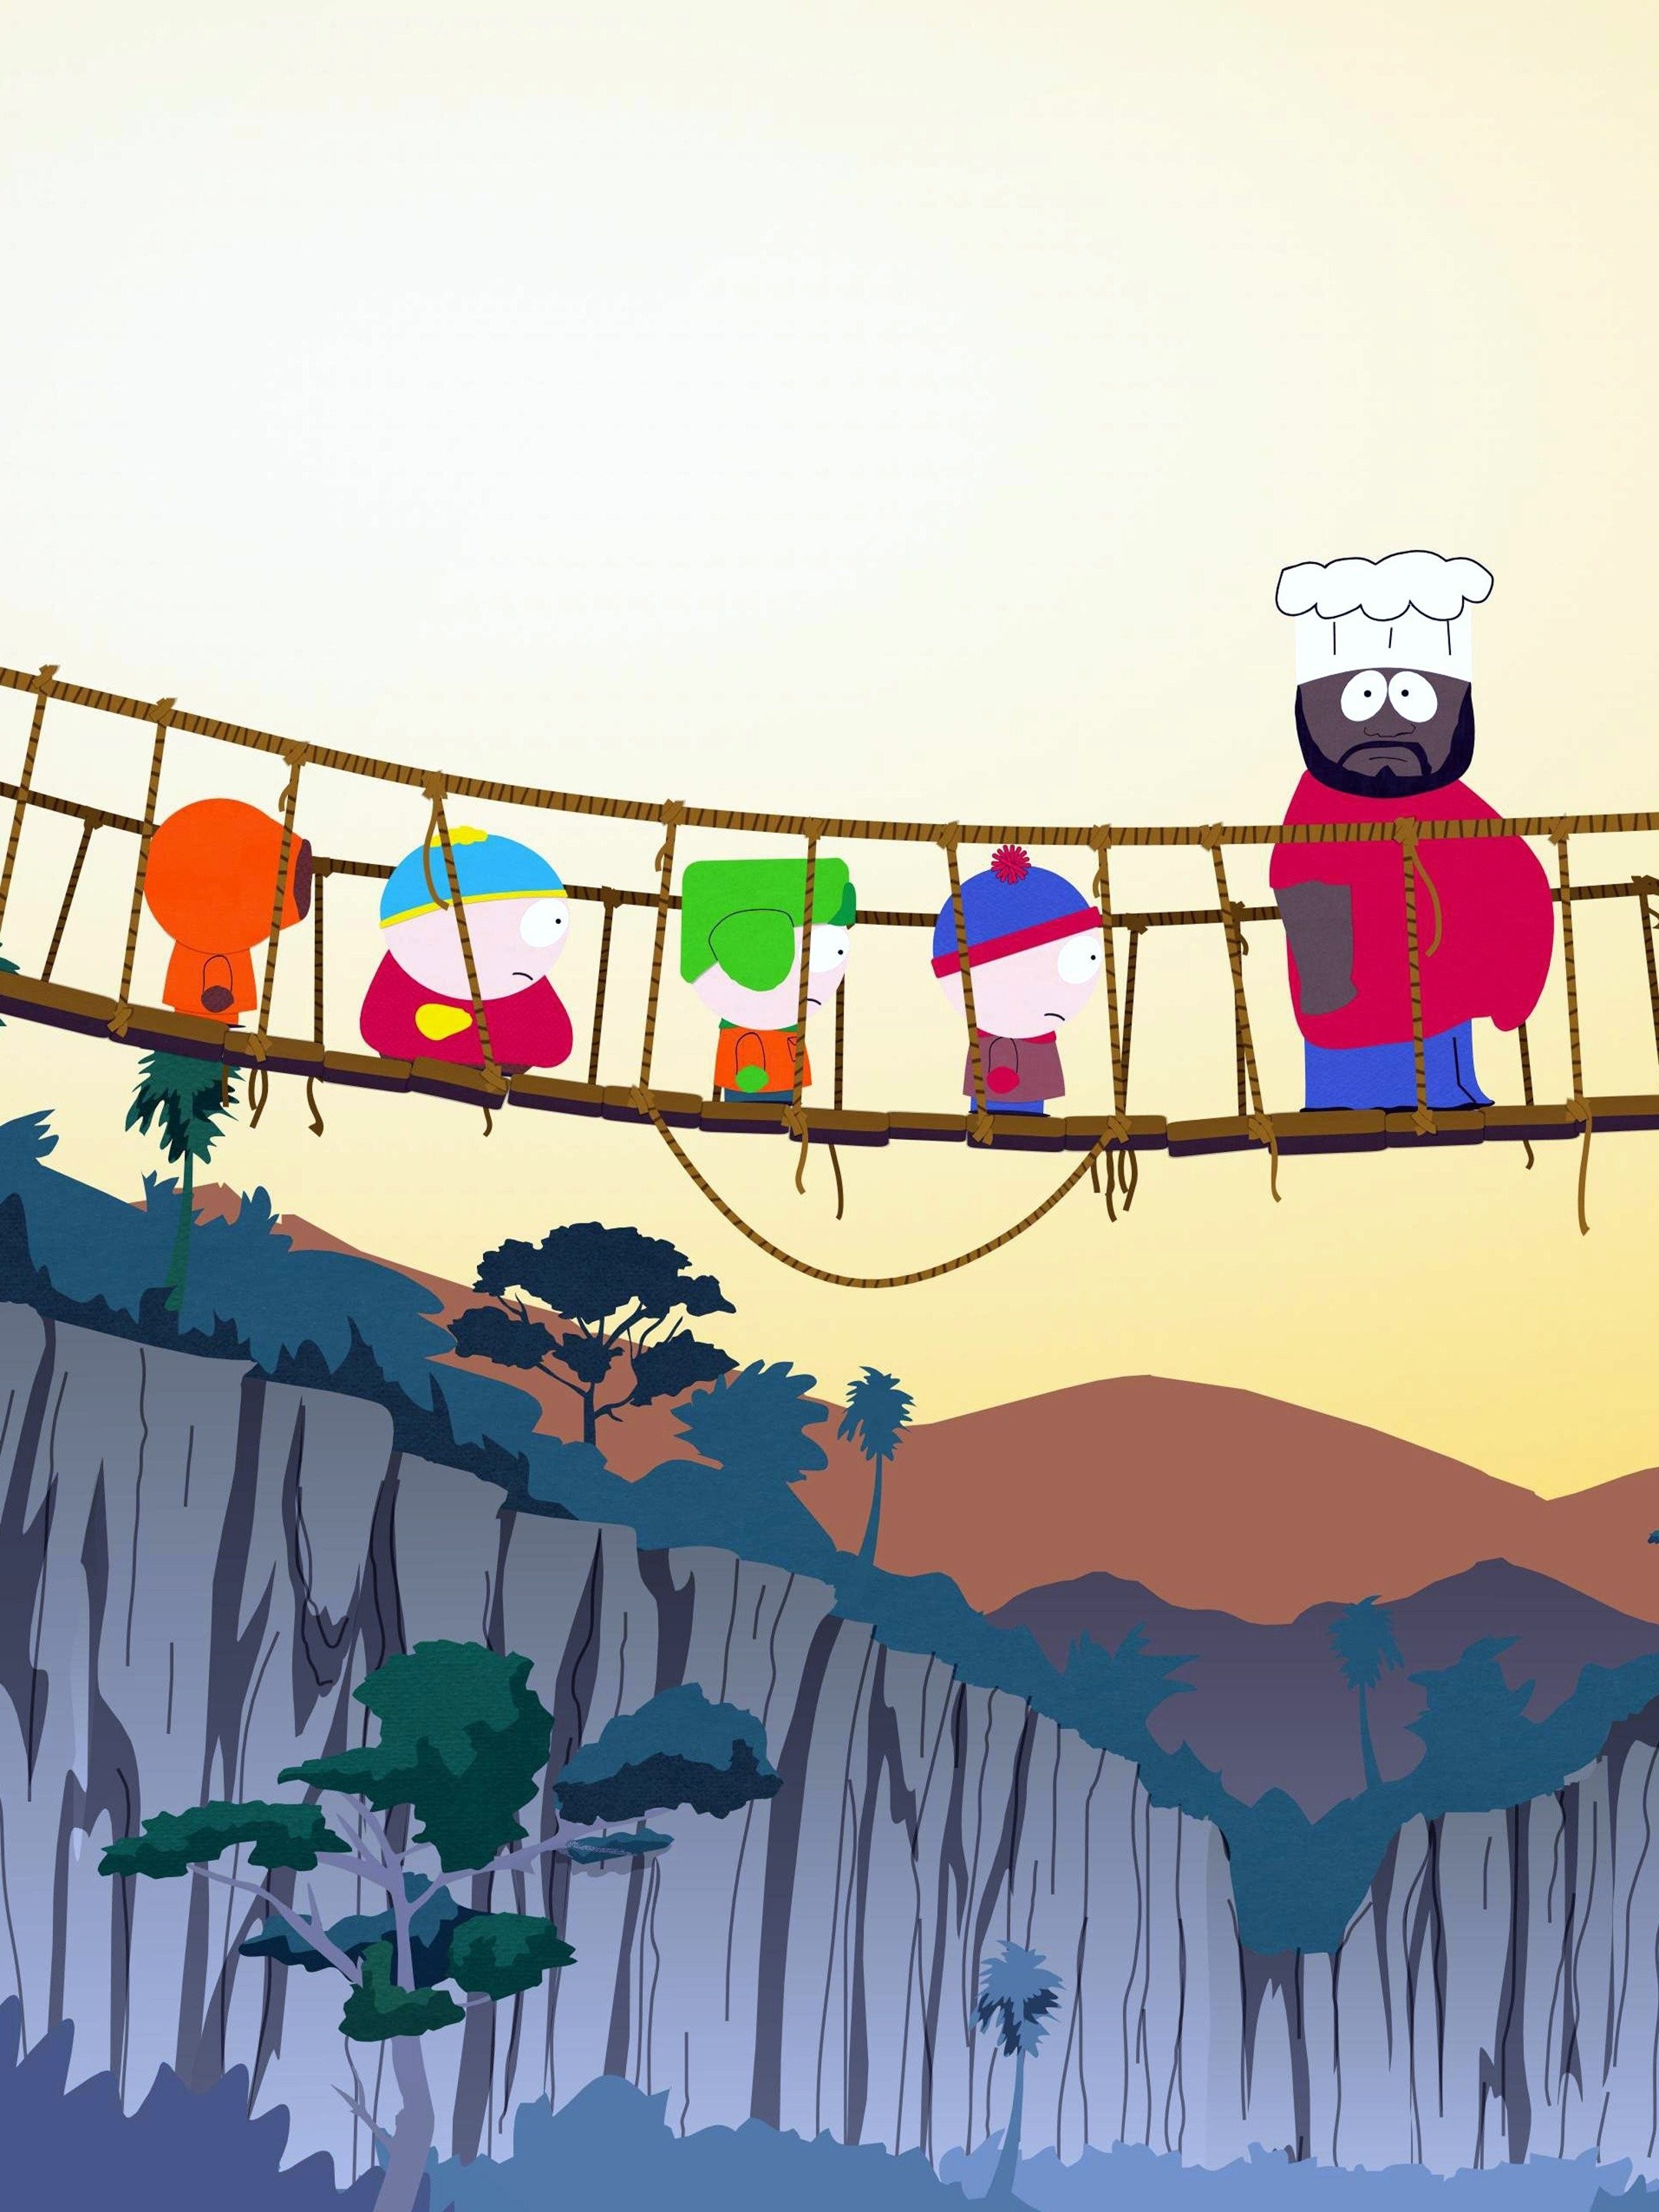 South Park Streaming Wars Part 2' Recap: ManBearPig's Family